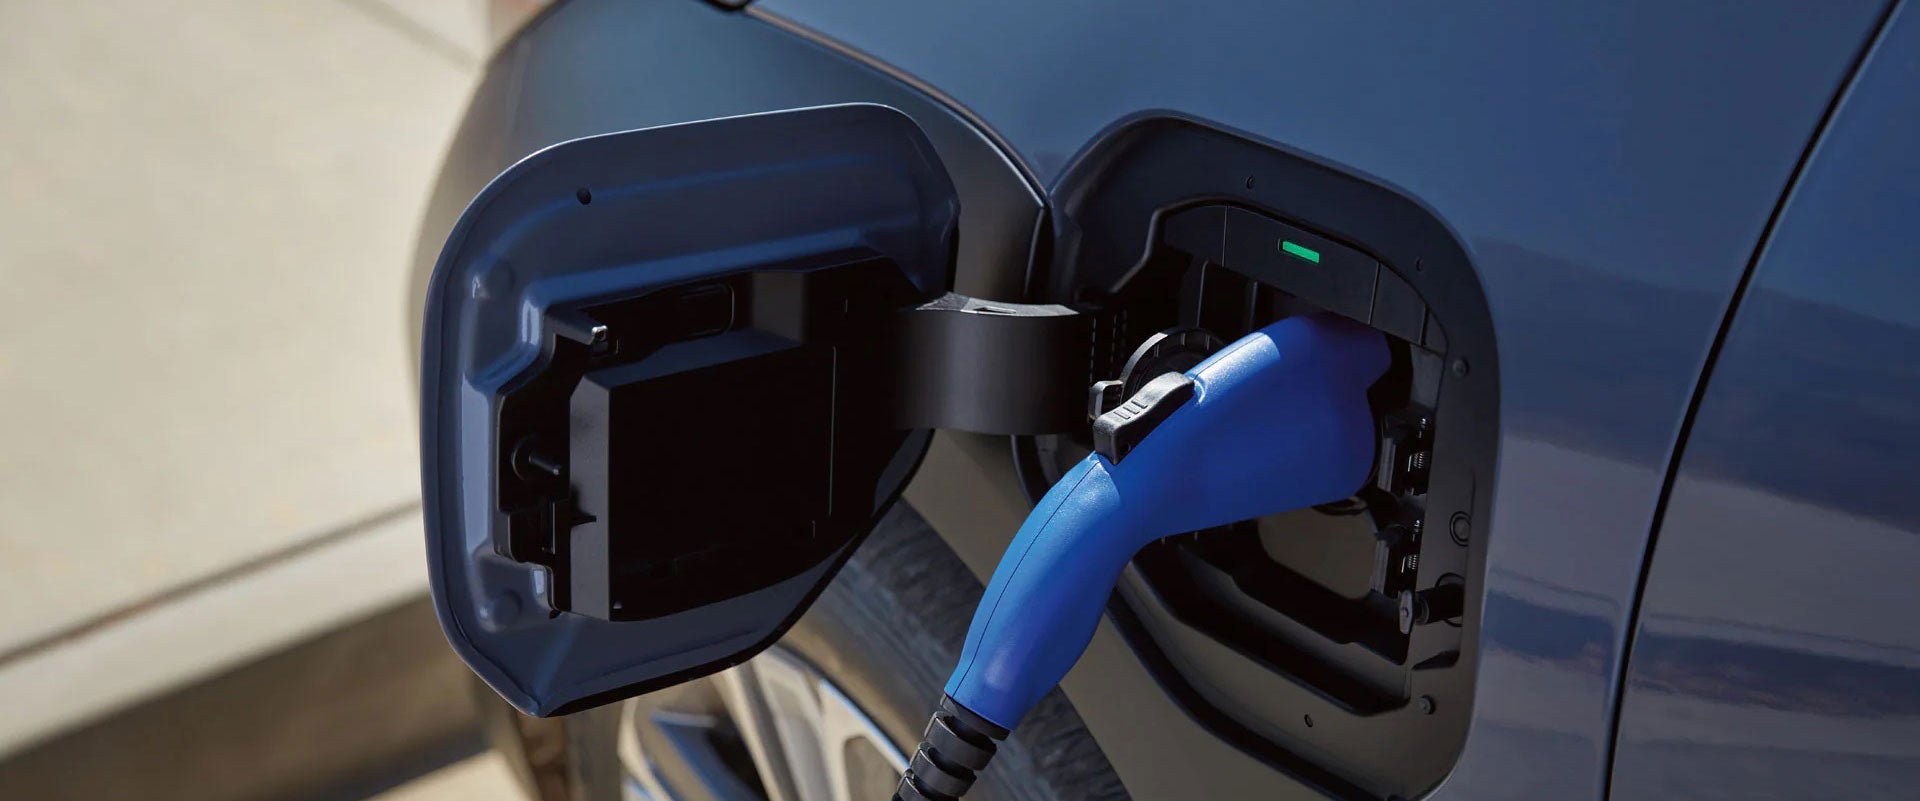 Guide to electric vehicles | Tindol Subaru in Gastonia NC